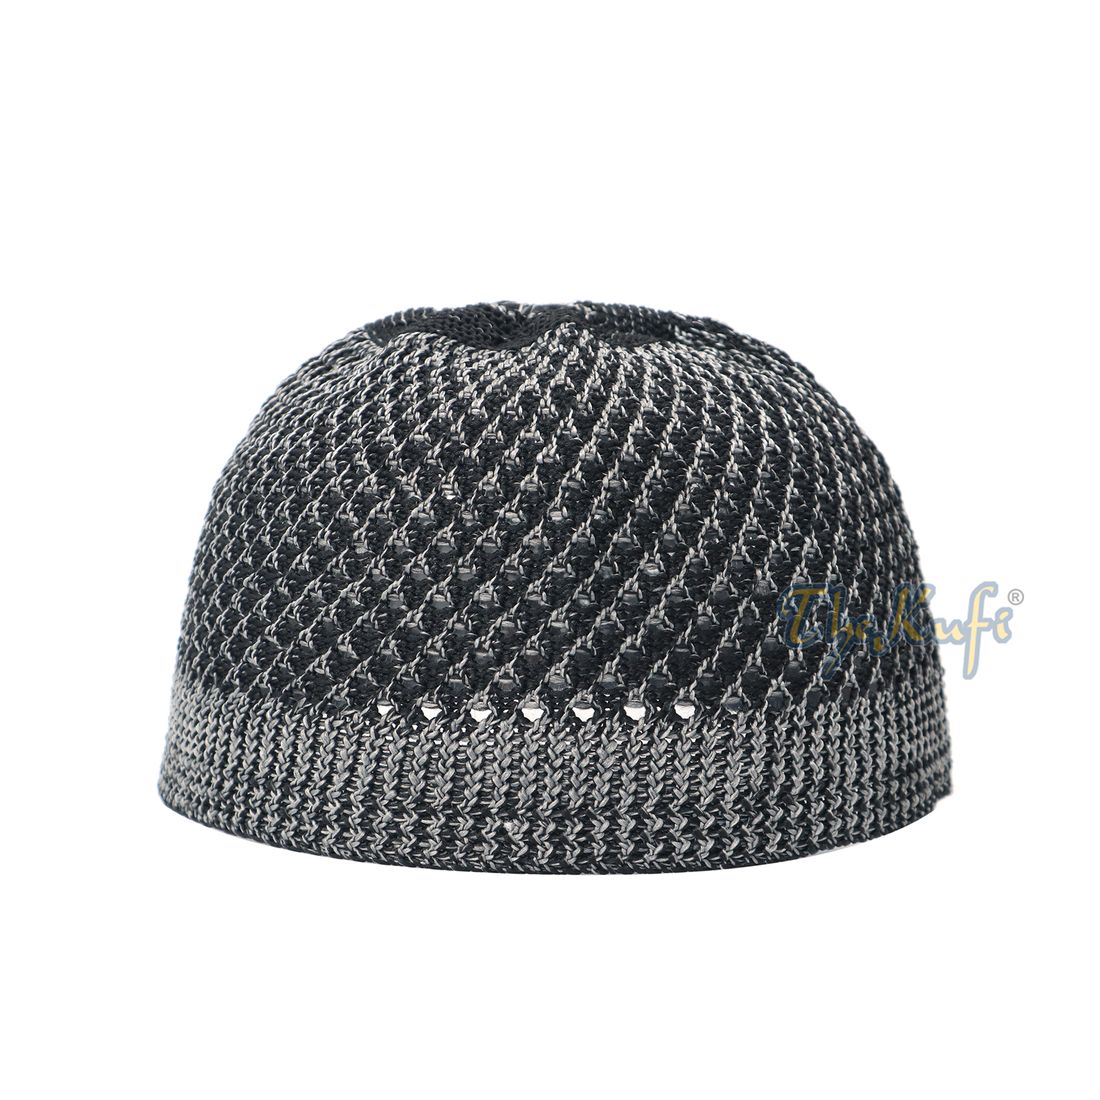 Faded Dark Gray Black Open-Weave Nylon Stretchy Kufi Hat Skull Cap Beanie